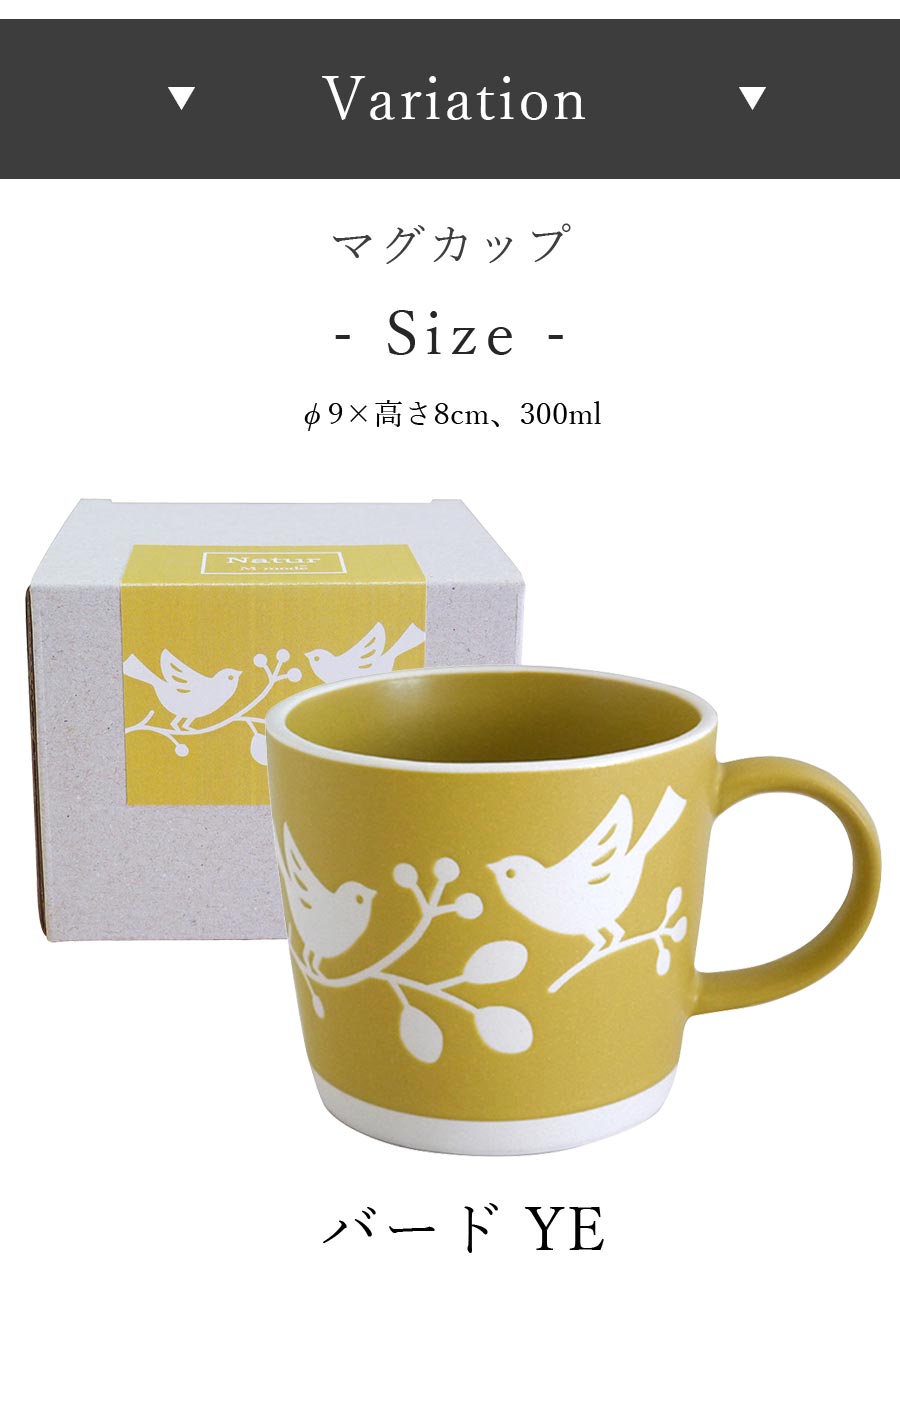 Mug Women's Gift Scandinavian Stylish Cute Natural [Natural Mug] Boxed Minoyaki Made in Japan [Marsan Kondo] [Silent]